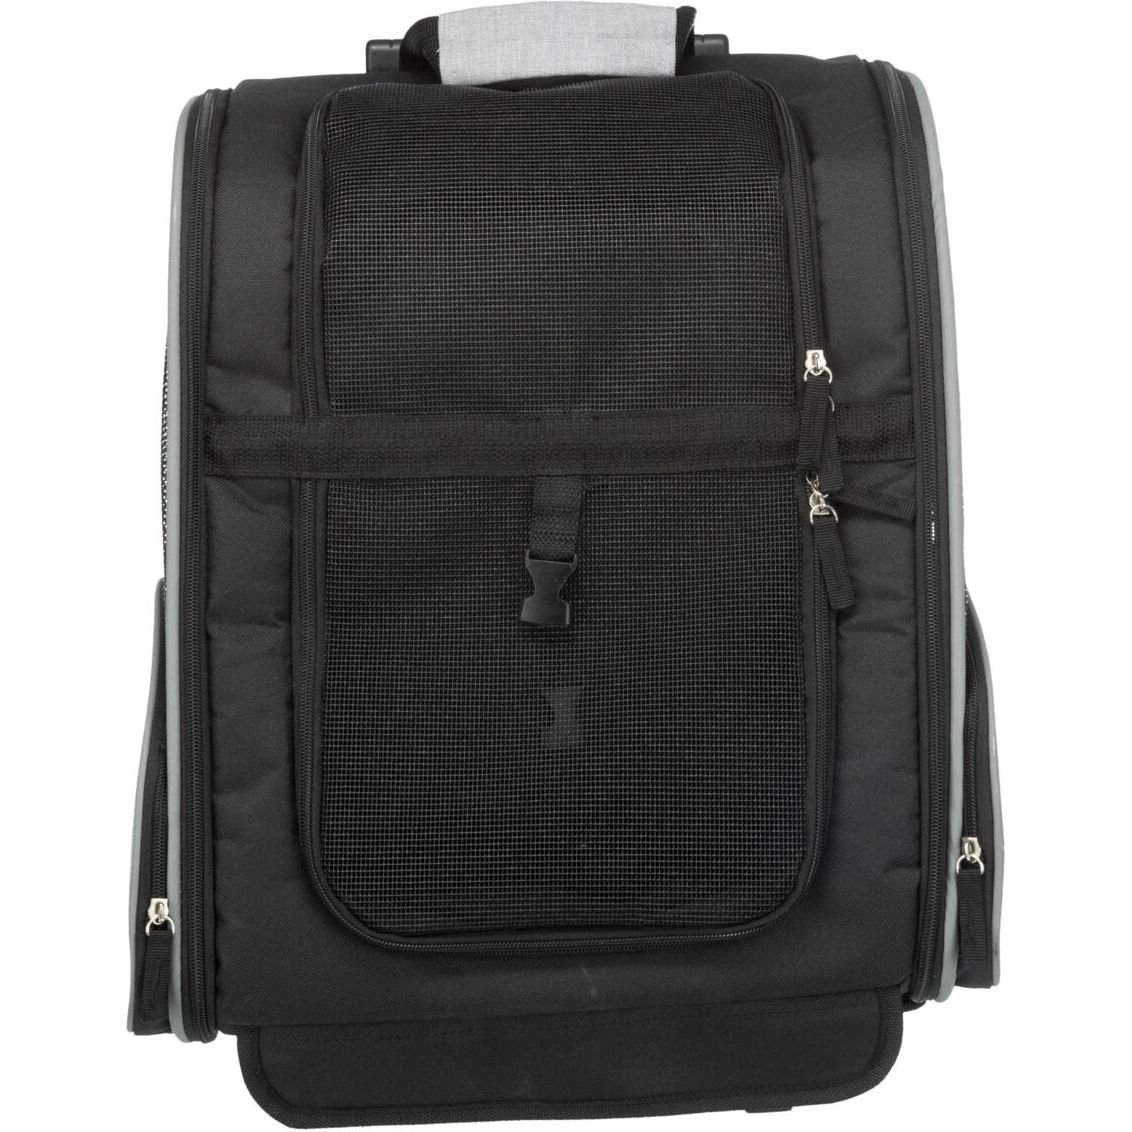 Сумка-рюкзак для собак Trixie Trolley, полиэстер, до 8 кг, 32х45х25 см, черная с серым - фото 6